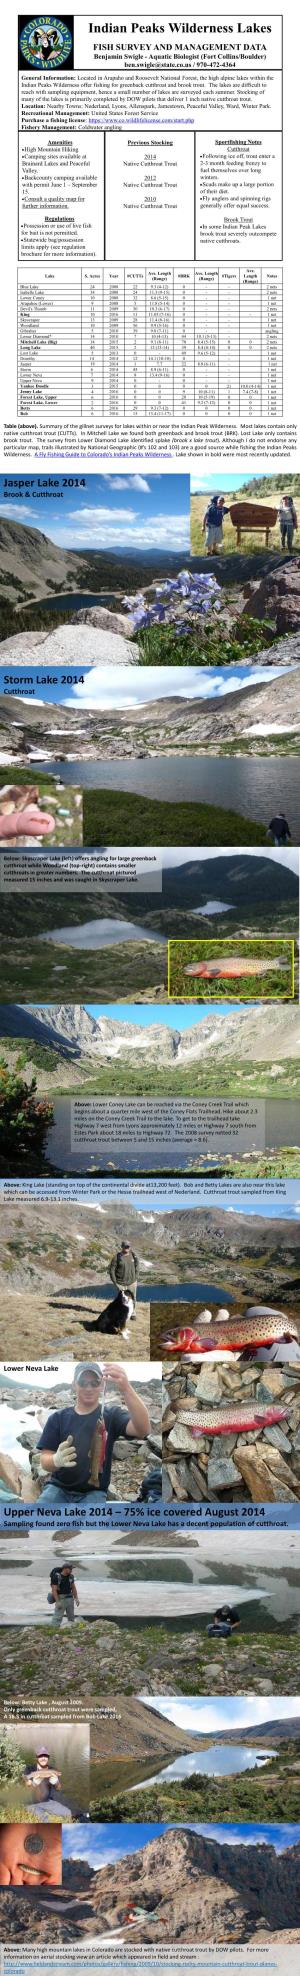 Indian Peaks Wilderness Lakes FISH SURVEY and MANAGEMENT DATA Benjamin Swigle - Aquatic Biologist (Fort Collins/Boulder) Ben.Swigle@State.Co.Us / 970-472-4364